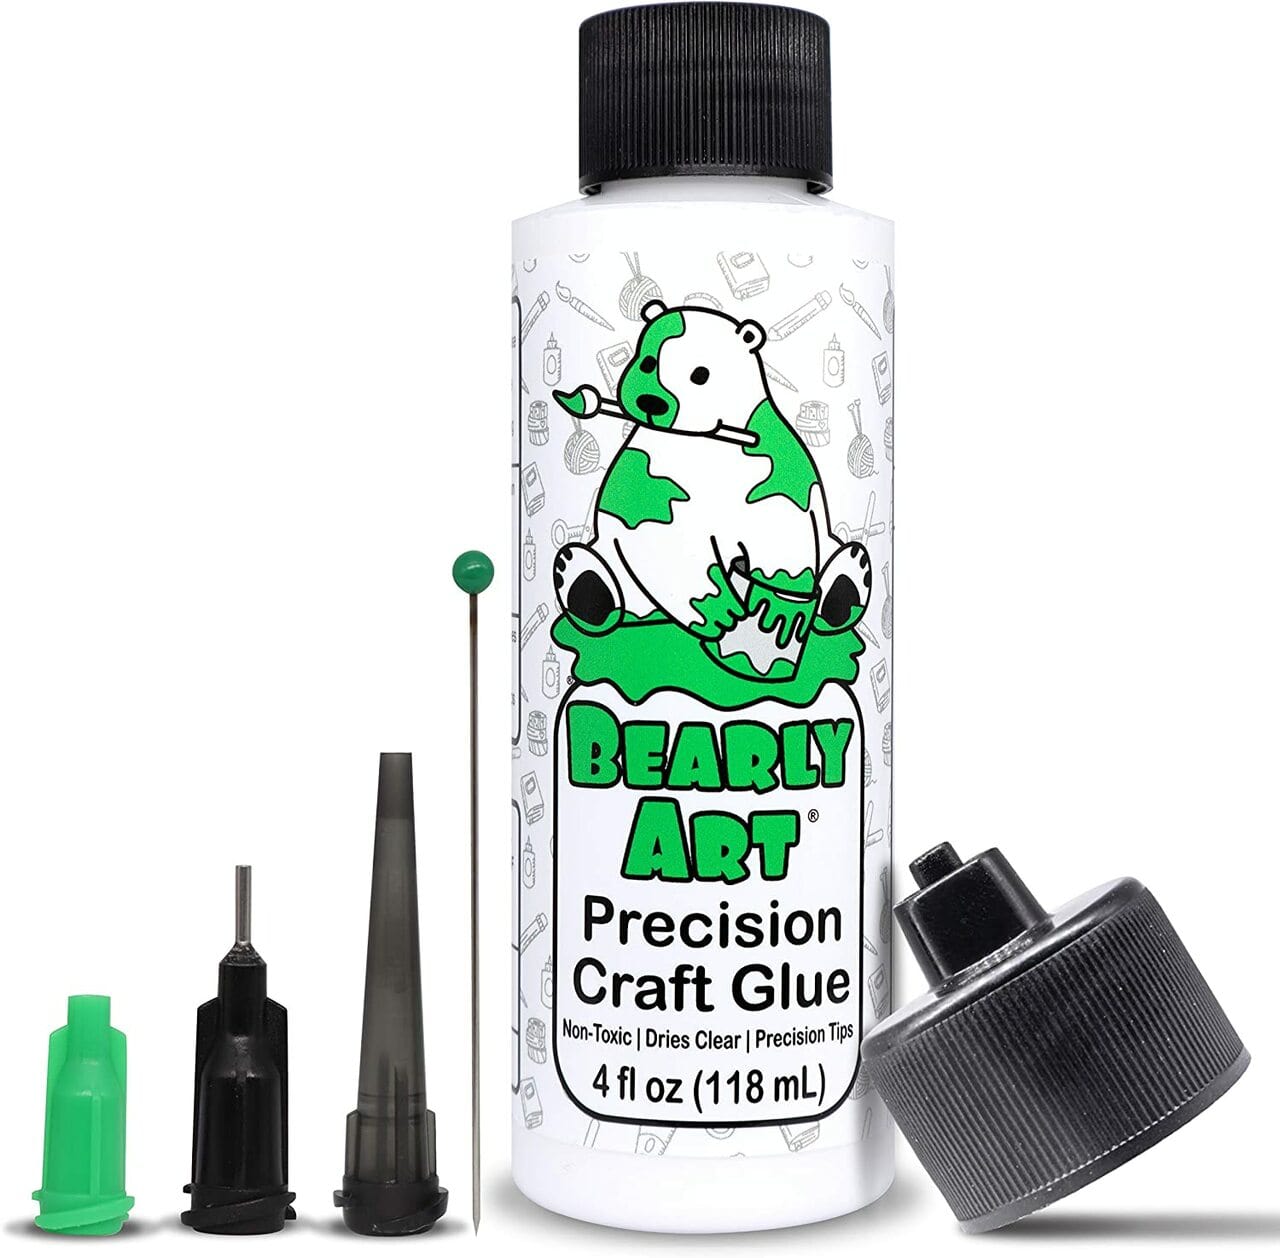 Bearly Art Precision Craft Glue Pin Kit - 202308240007